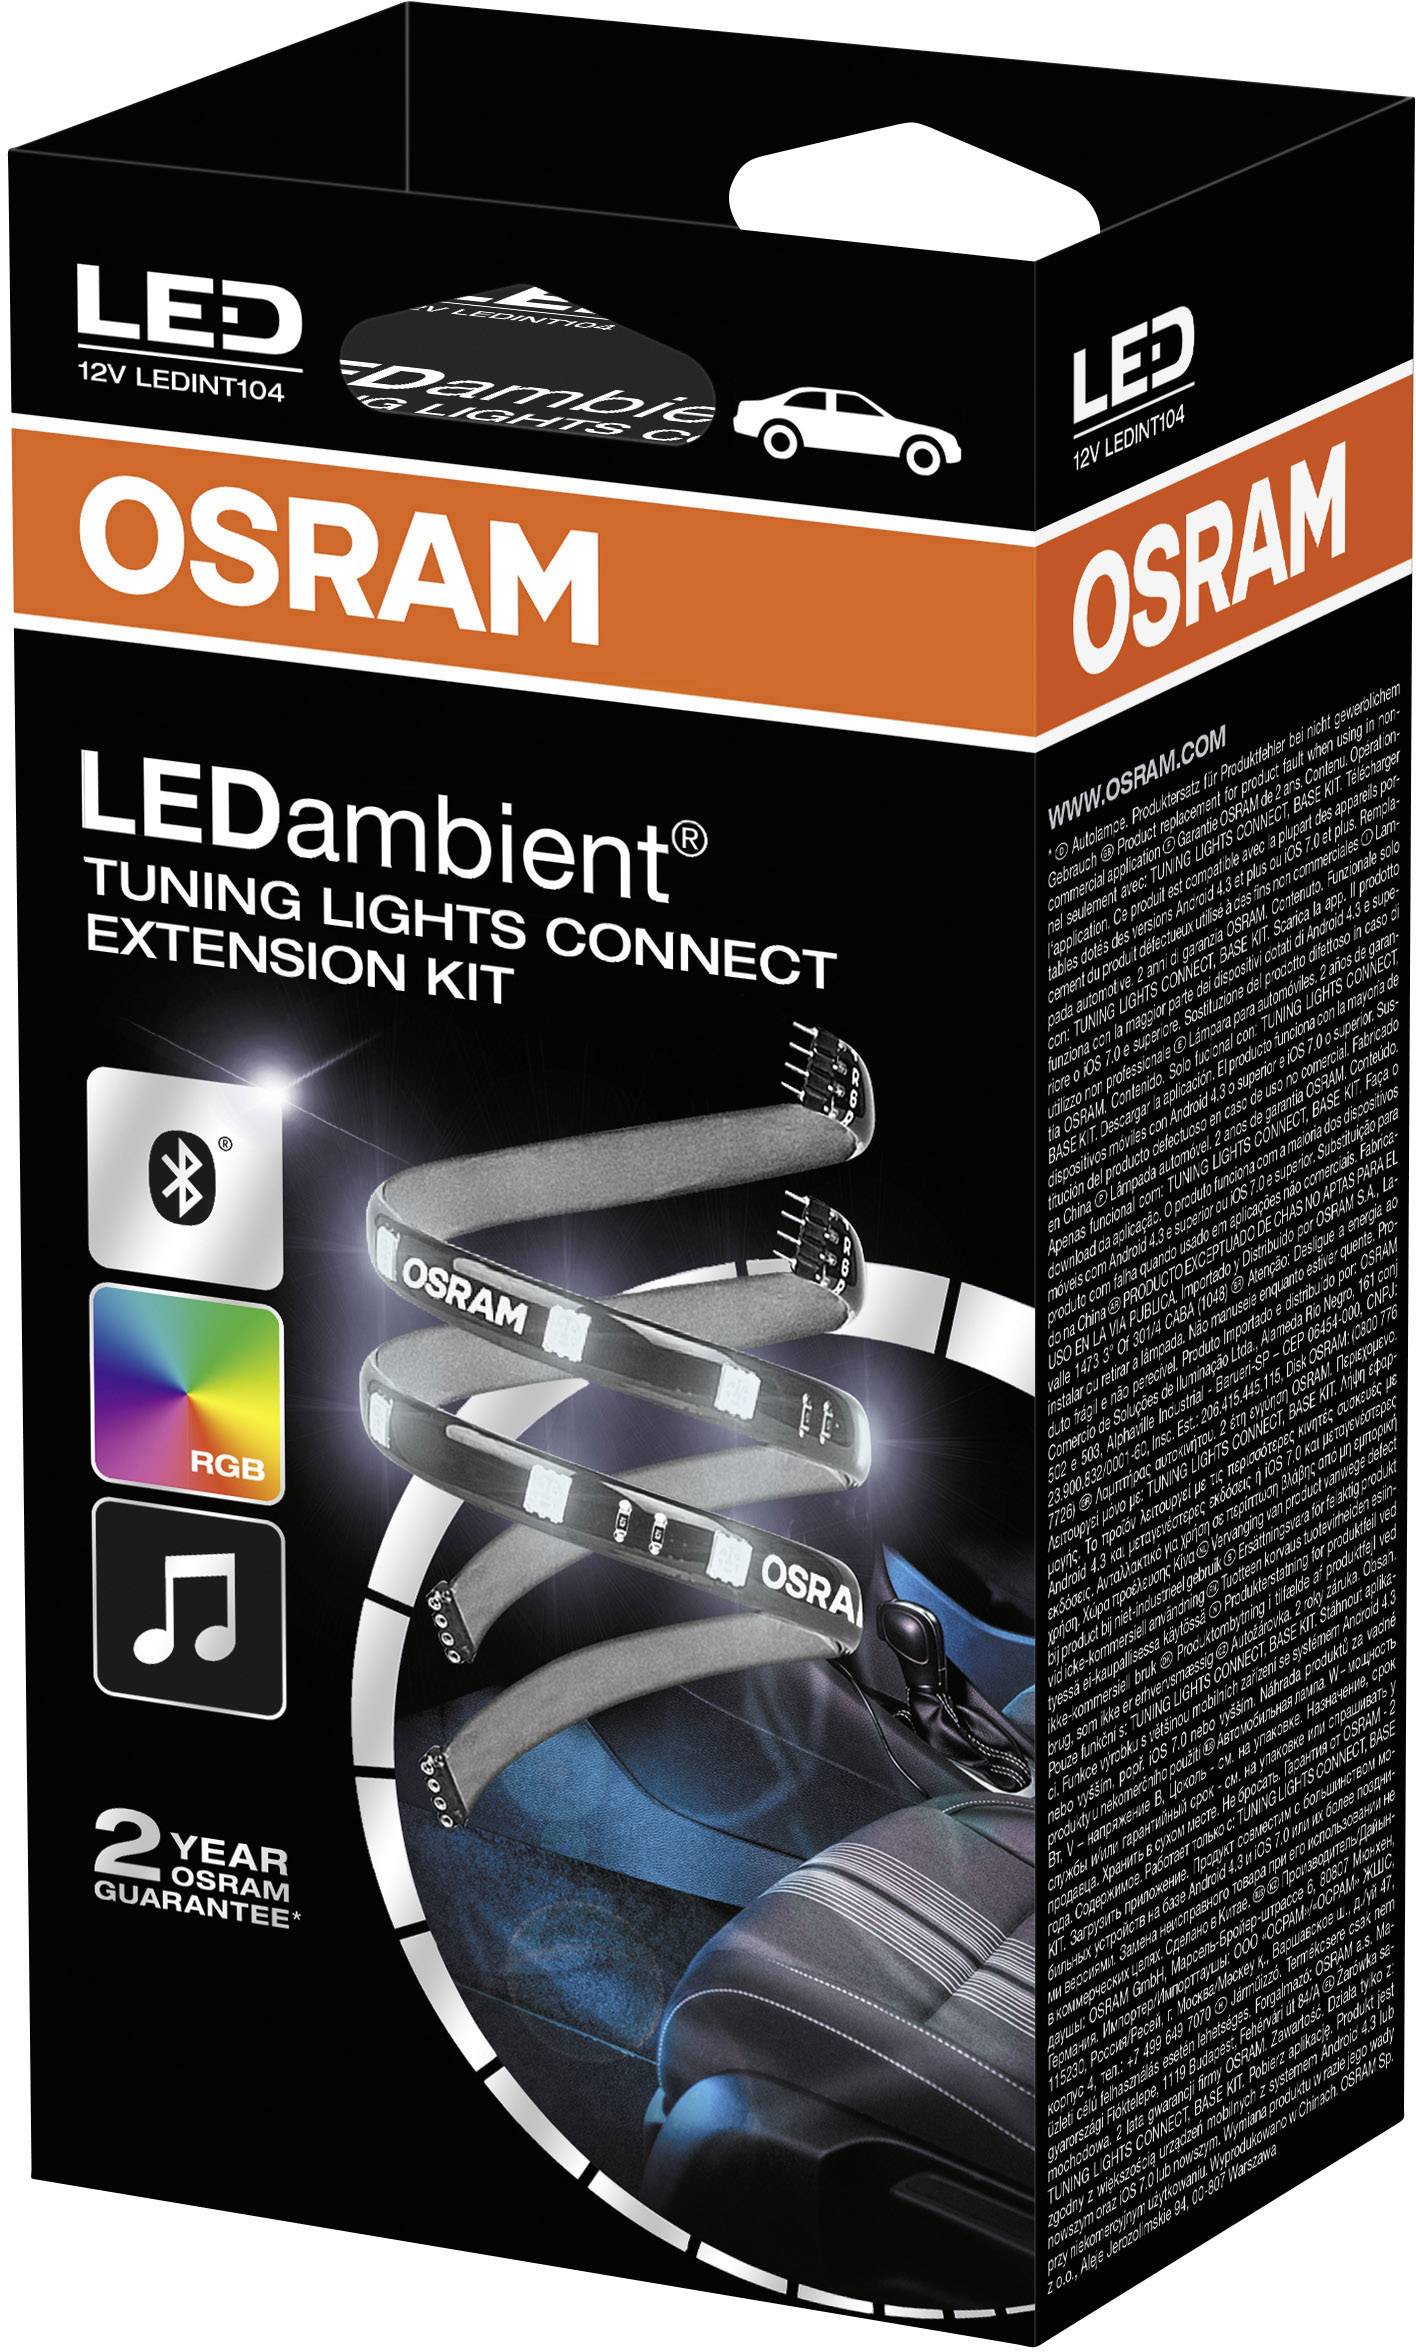 Hoorzitting zingen Atlantische Oceaan OSRAM LEDambient TUNING LIGHTS CONNECT Extension Kit LED strip | Conrad.com